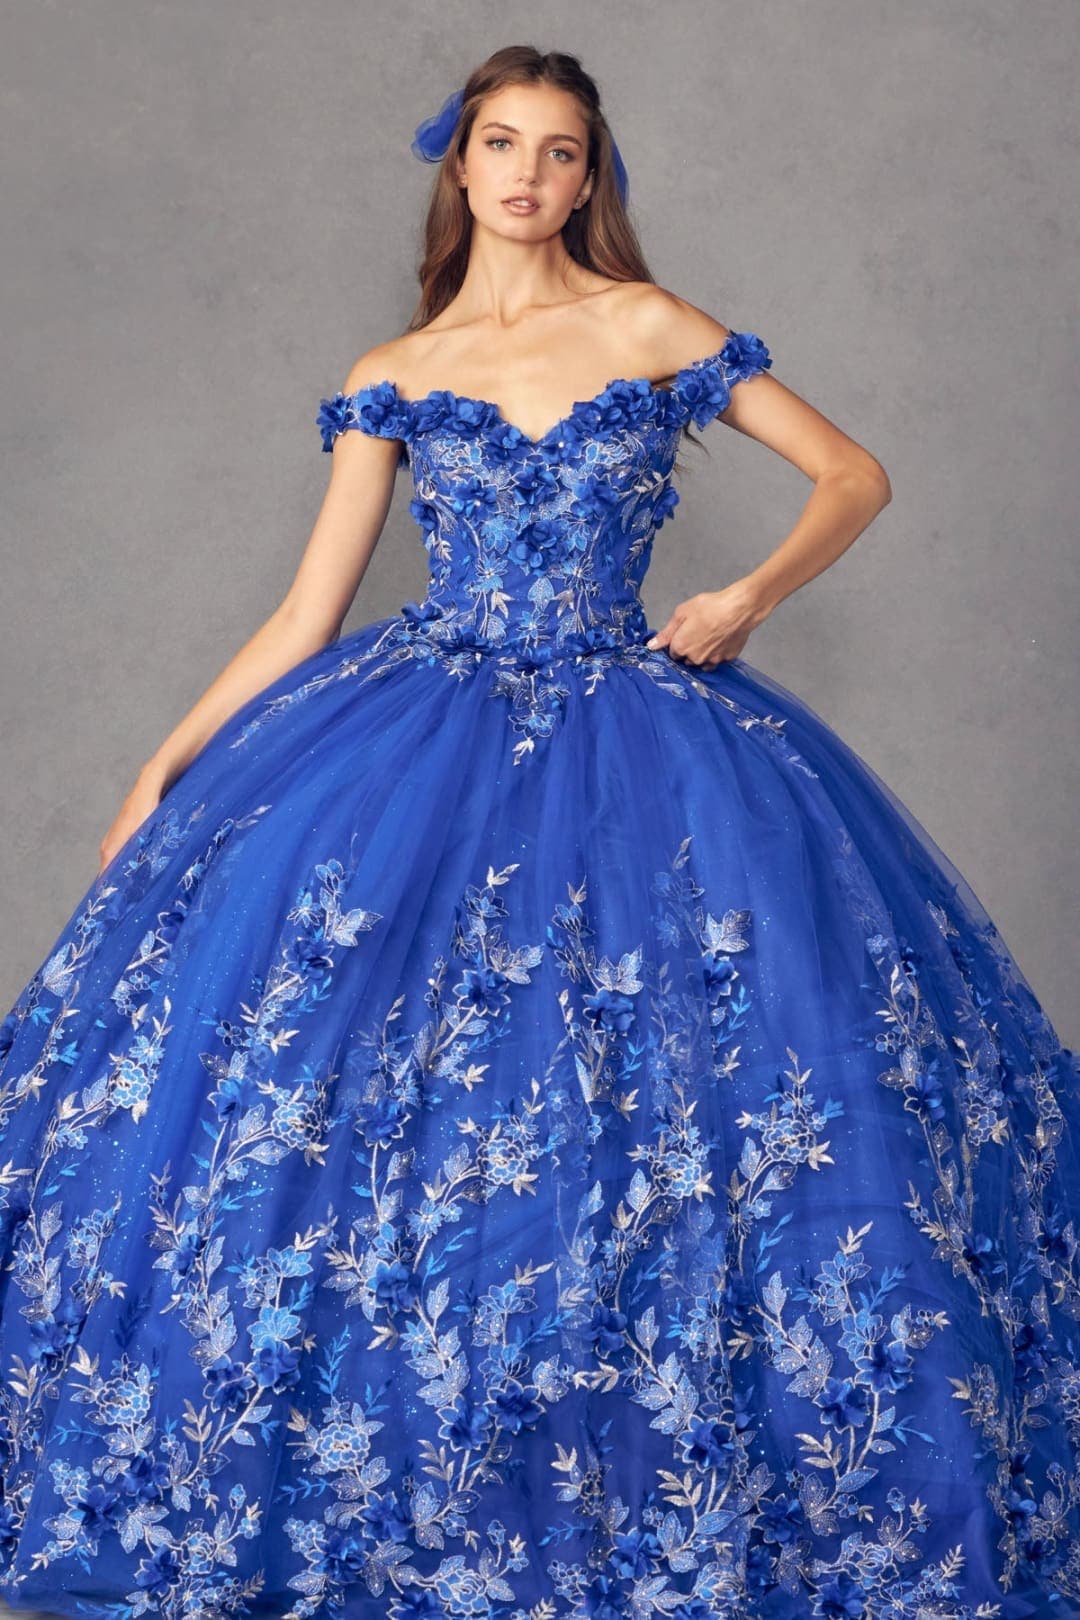 Juliet 1447 Off Shoulder 3D Floral Applique Embroidered Quince Gown - ROYAL BLUE / XS